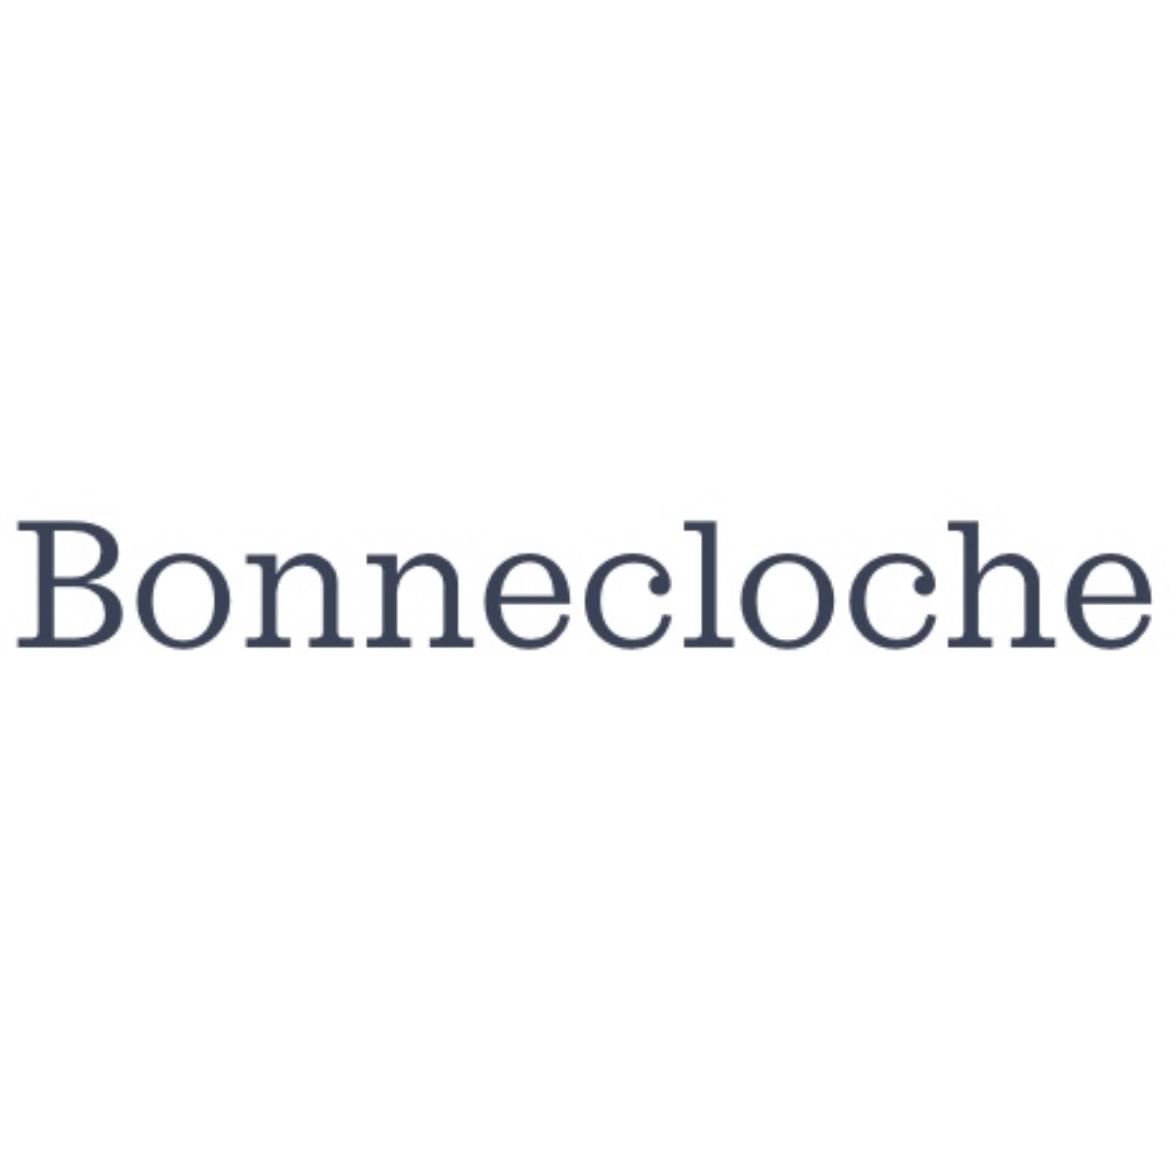 Bonneclocheの画像